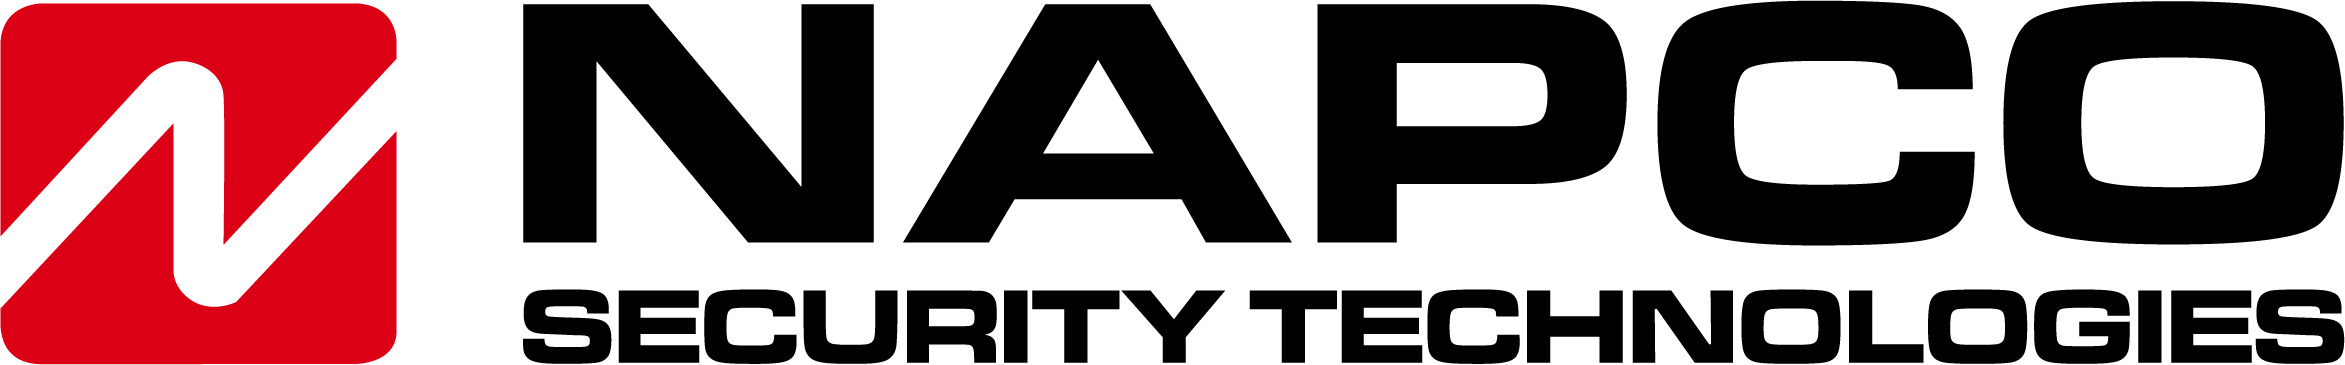 Napco Security Technologies logo